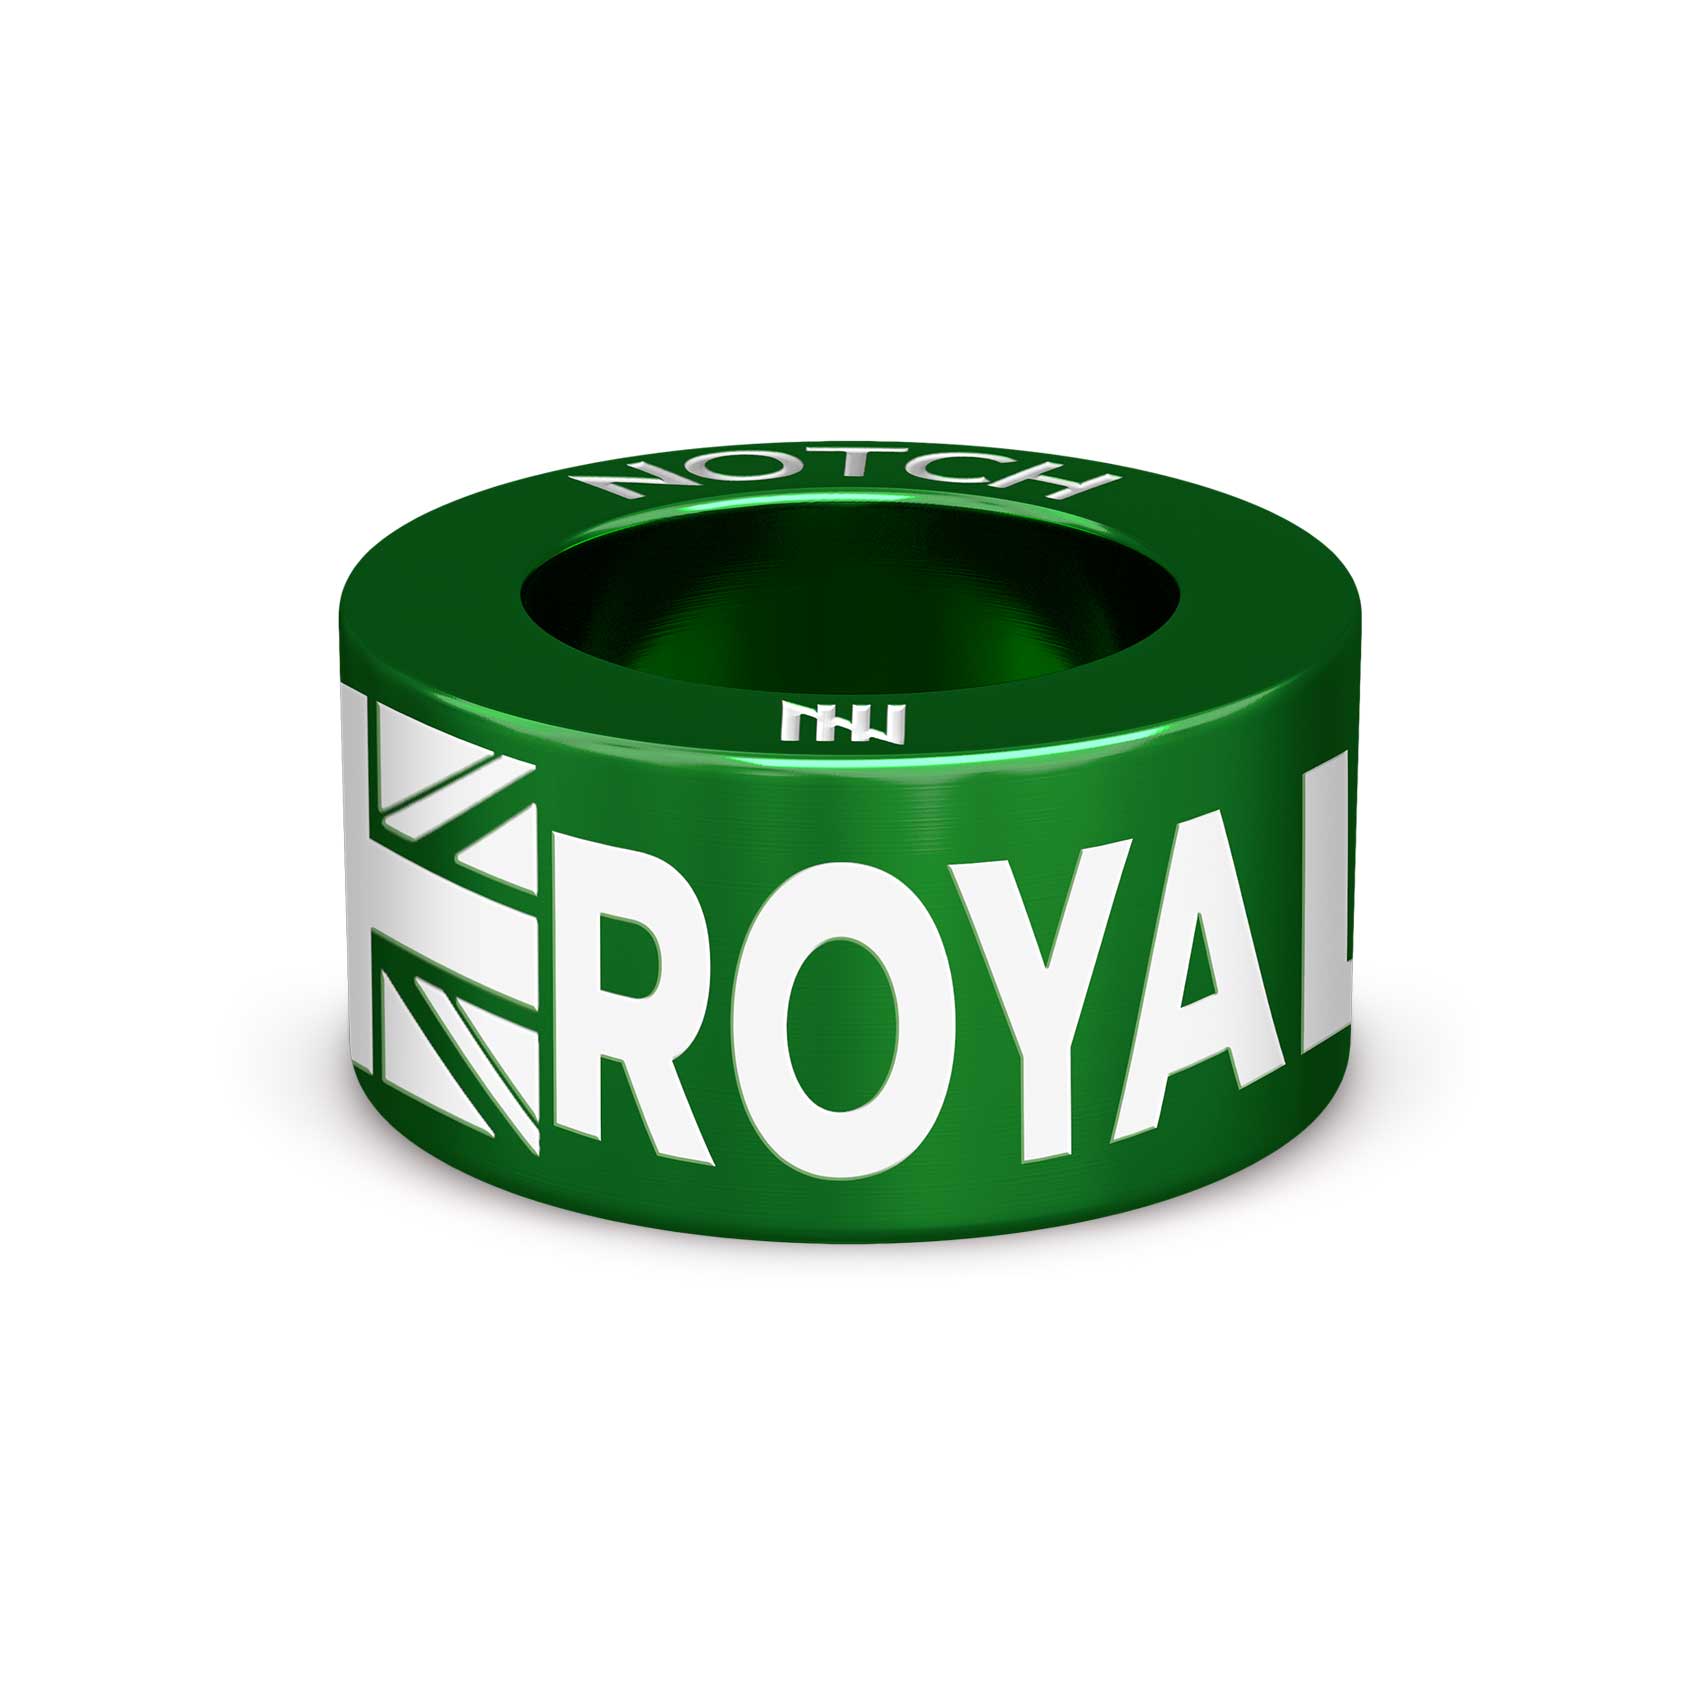 Royal Green Jackets NOTCH Charm